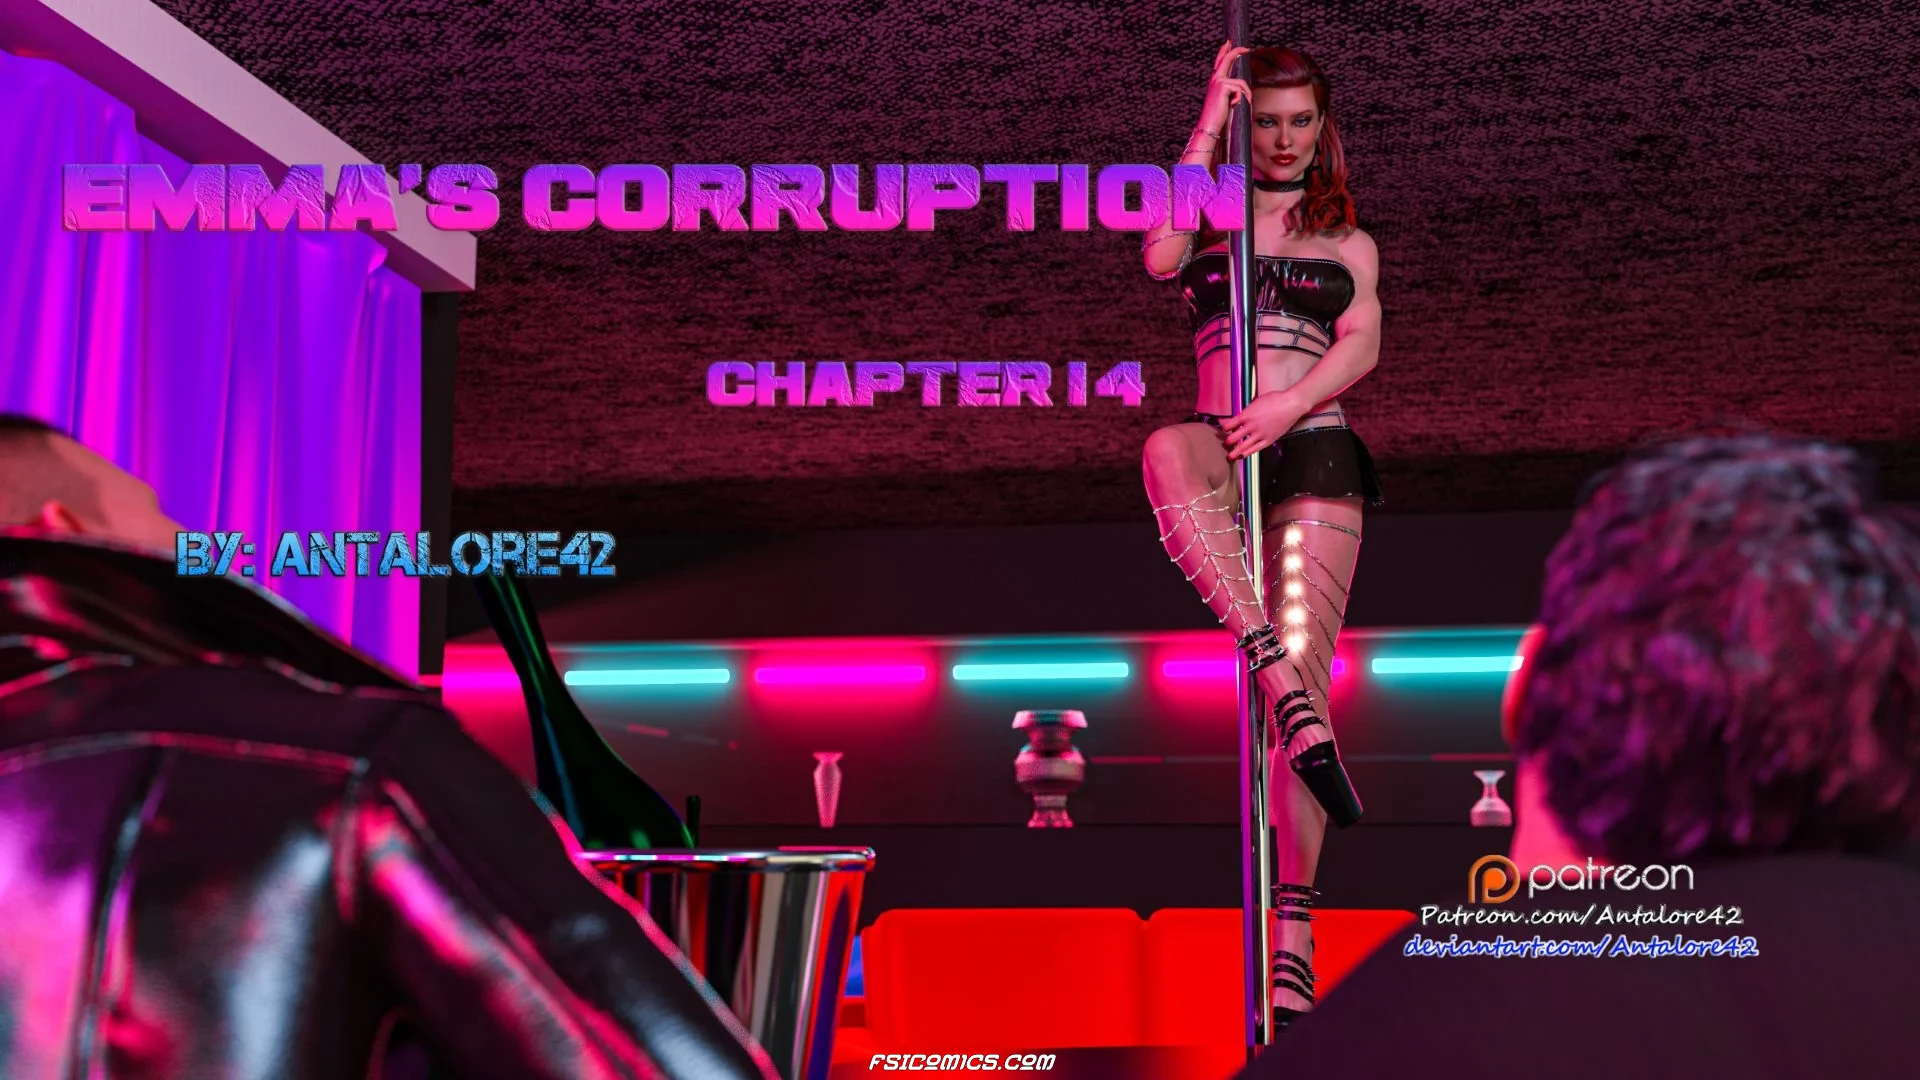 Emmas Corruption Chapter 14 - Antalore42 - 43 - FSIComics